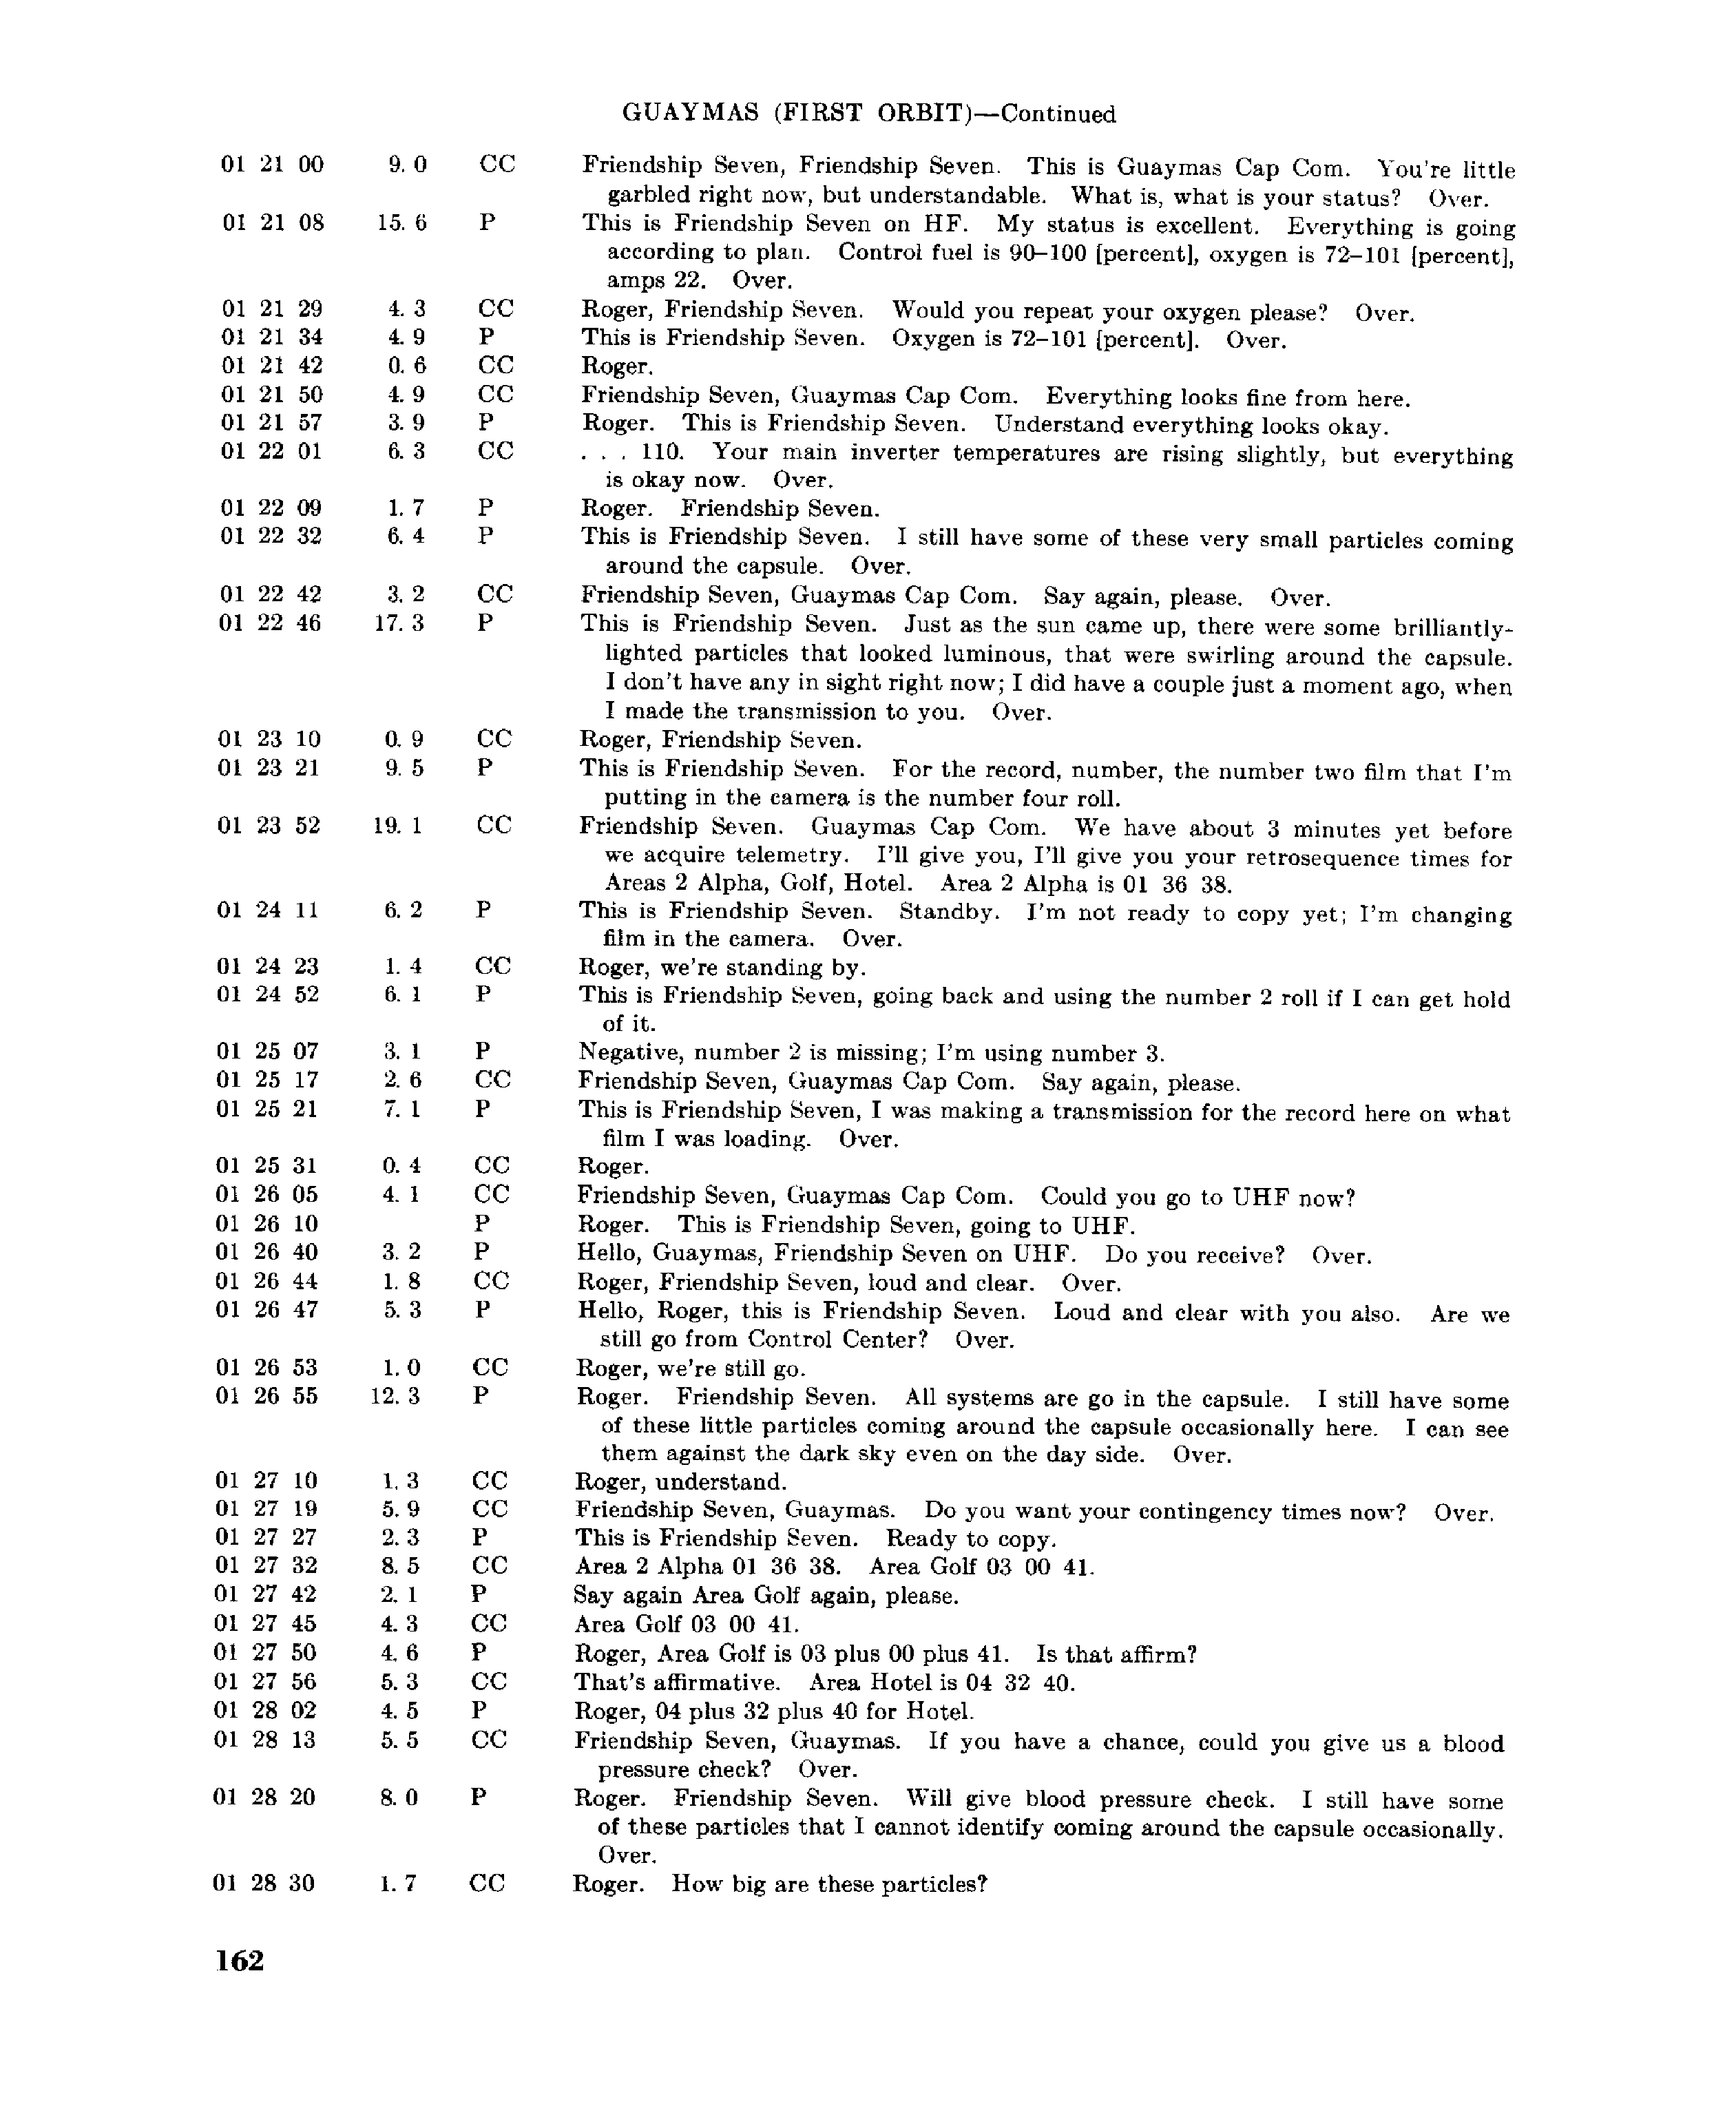 Page 161 of Mercury 6’s original transcript